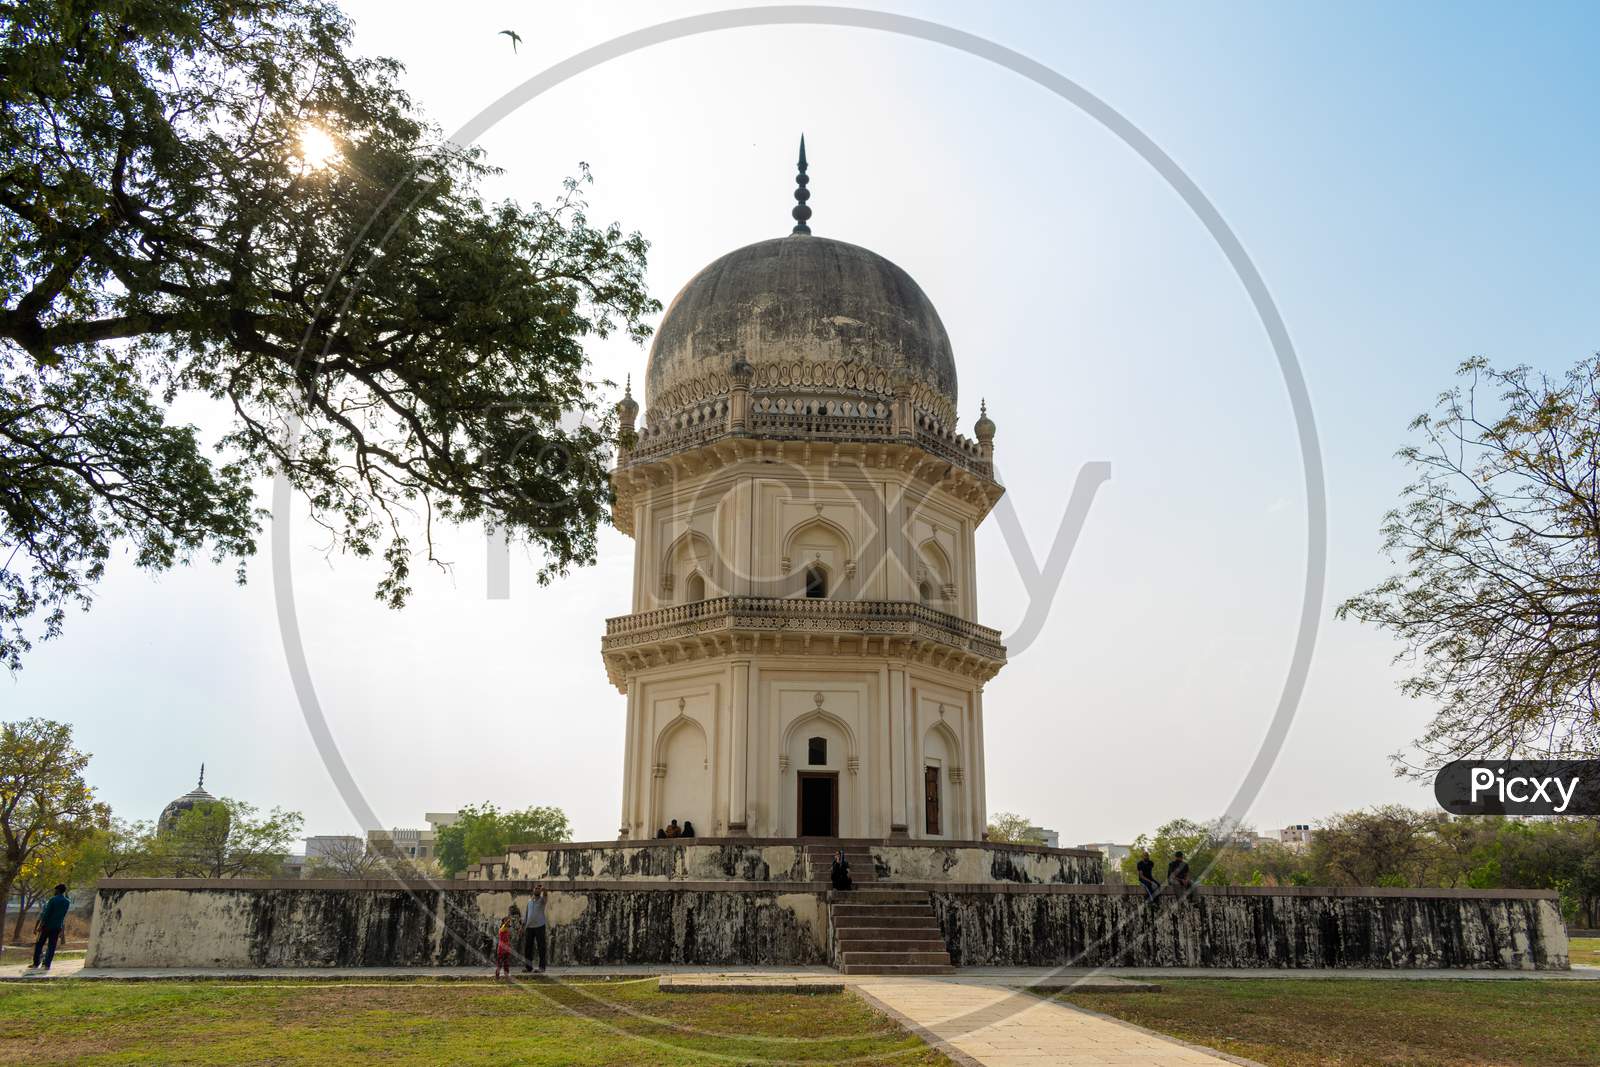 jamshed quli qutb shah's tomb conservation at at Qutb Shahi Heritage Park Hyderabad